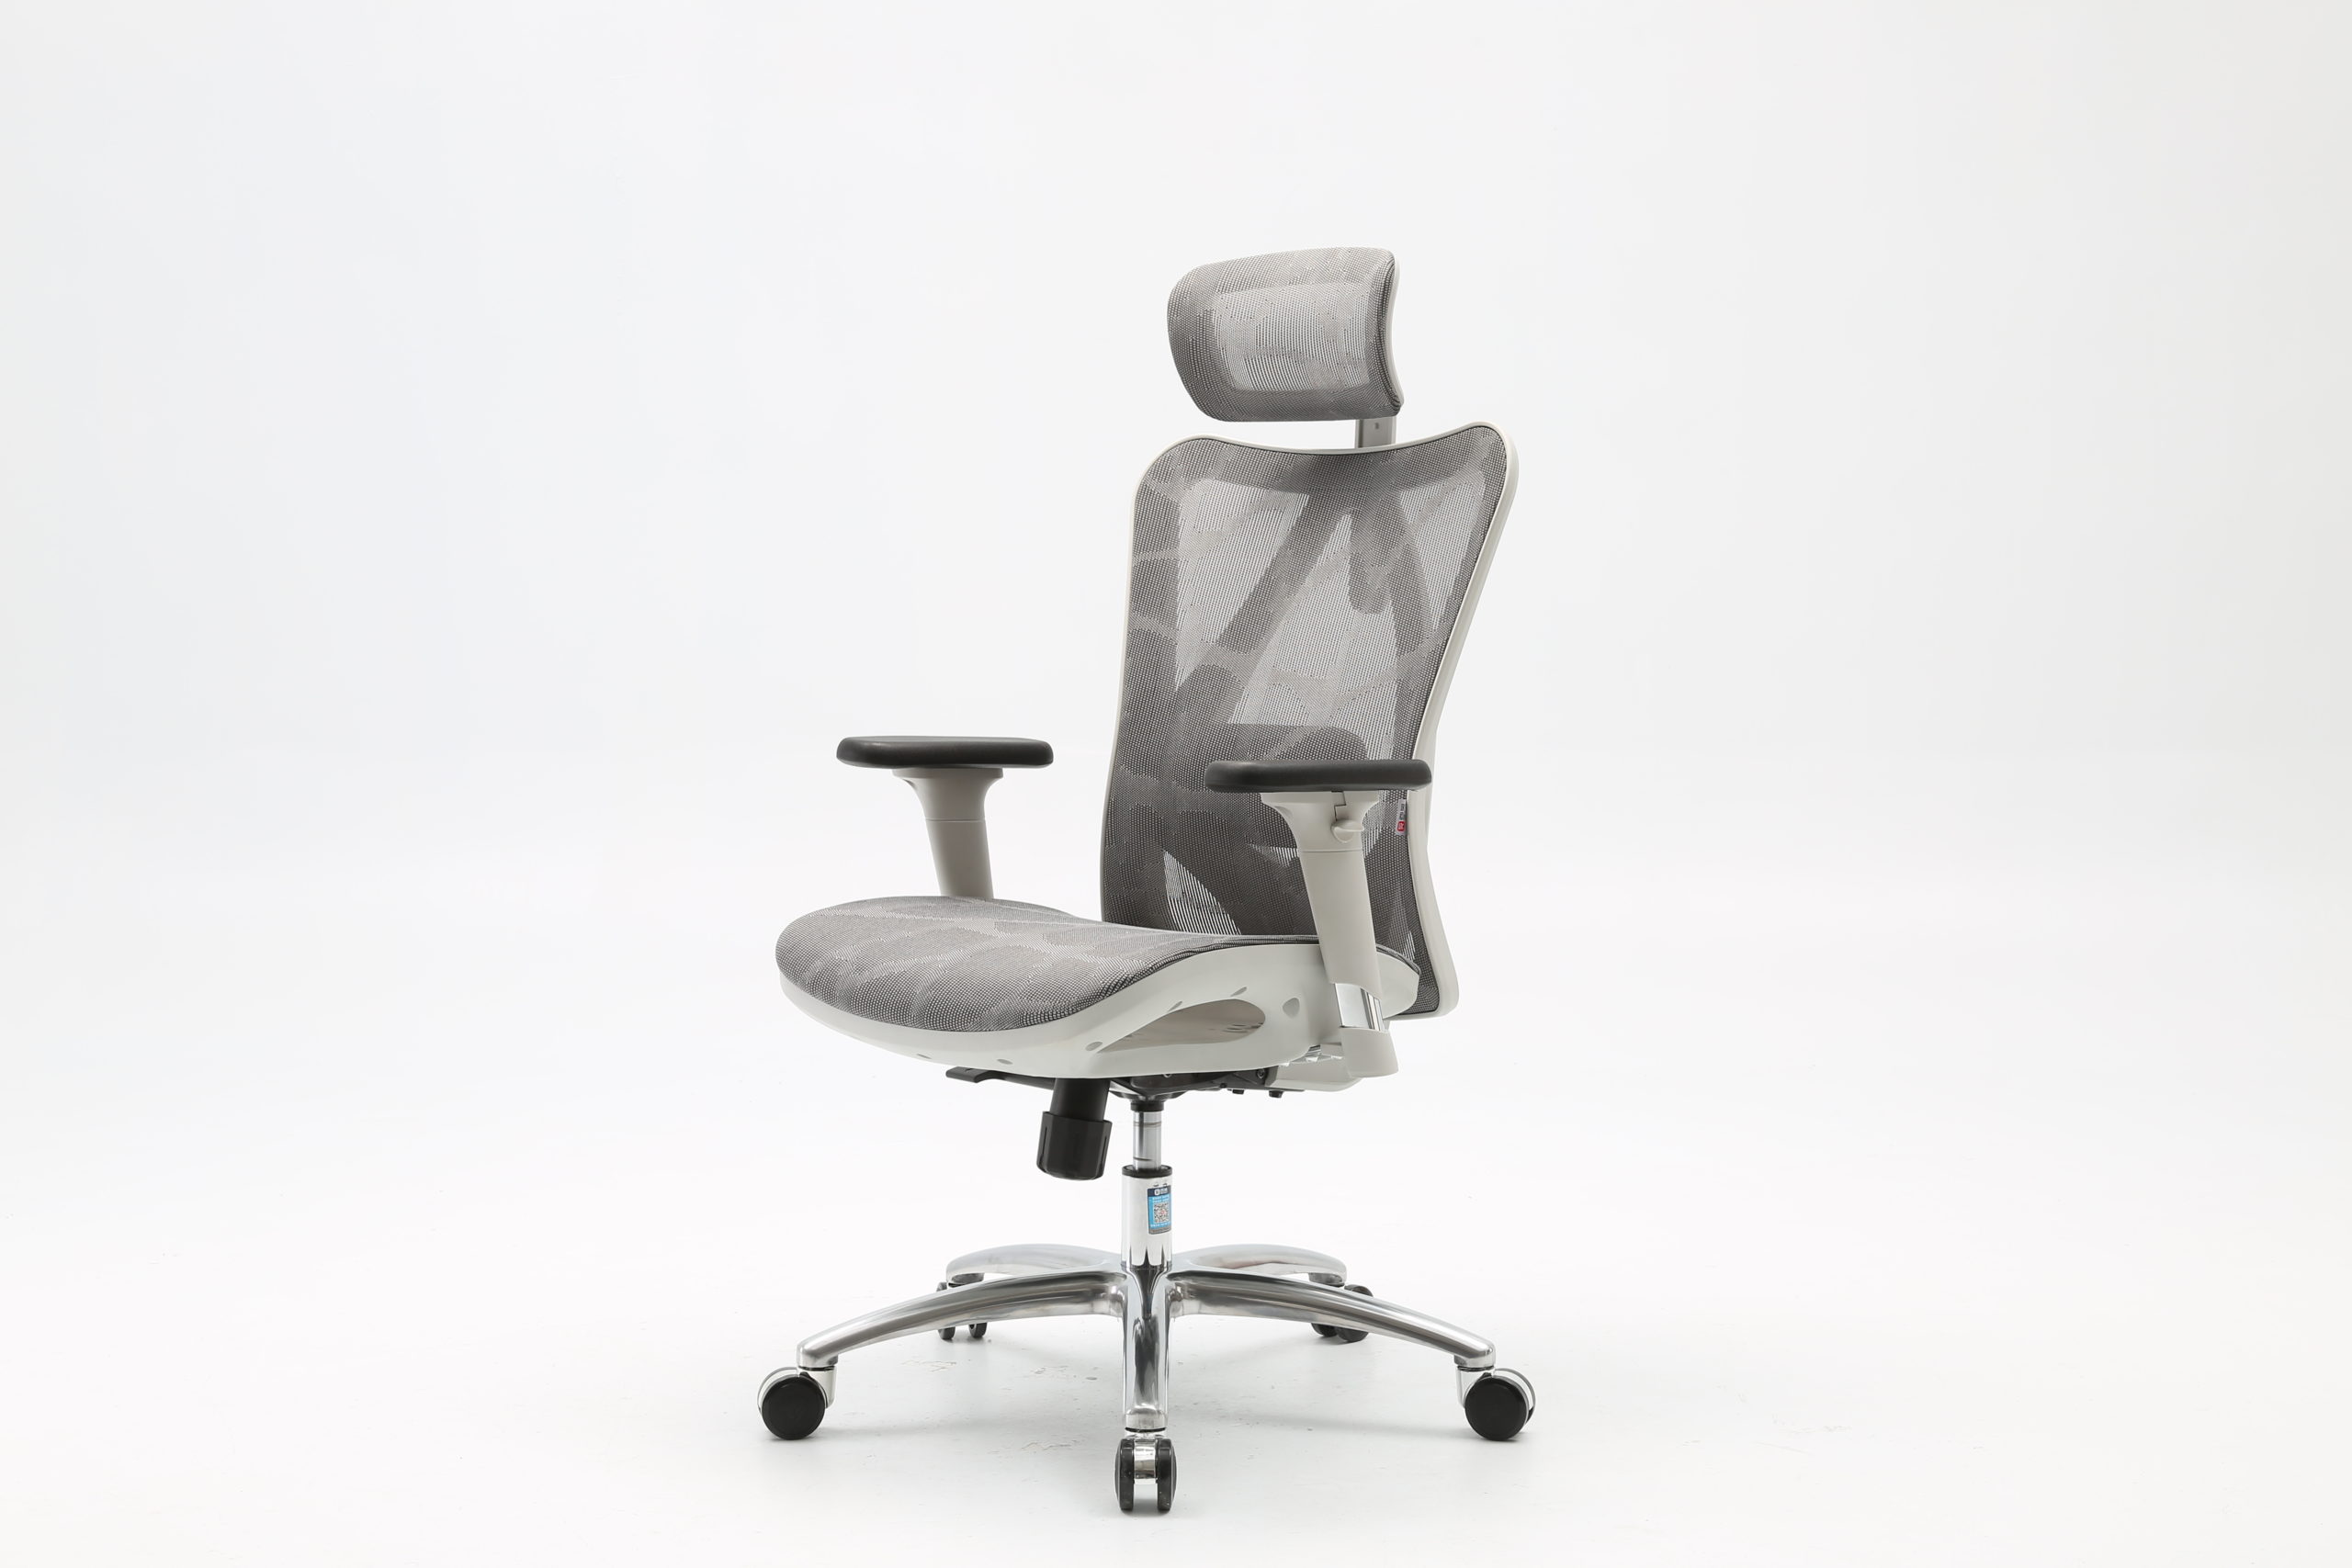 SIHOO M57 Ergonomic Mesh Seat, Headrest, Armrest - Grey